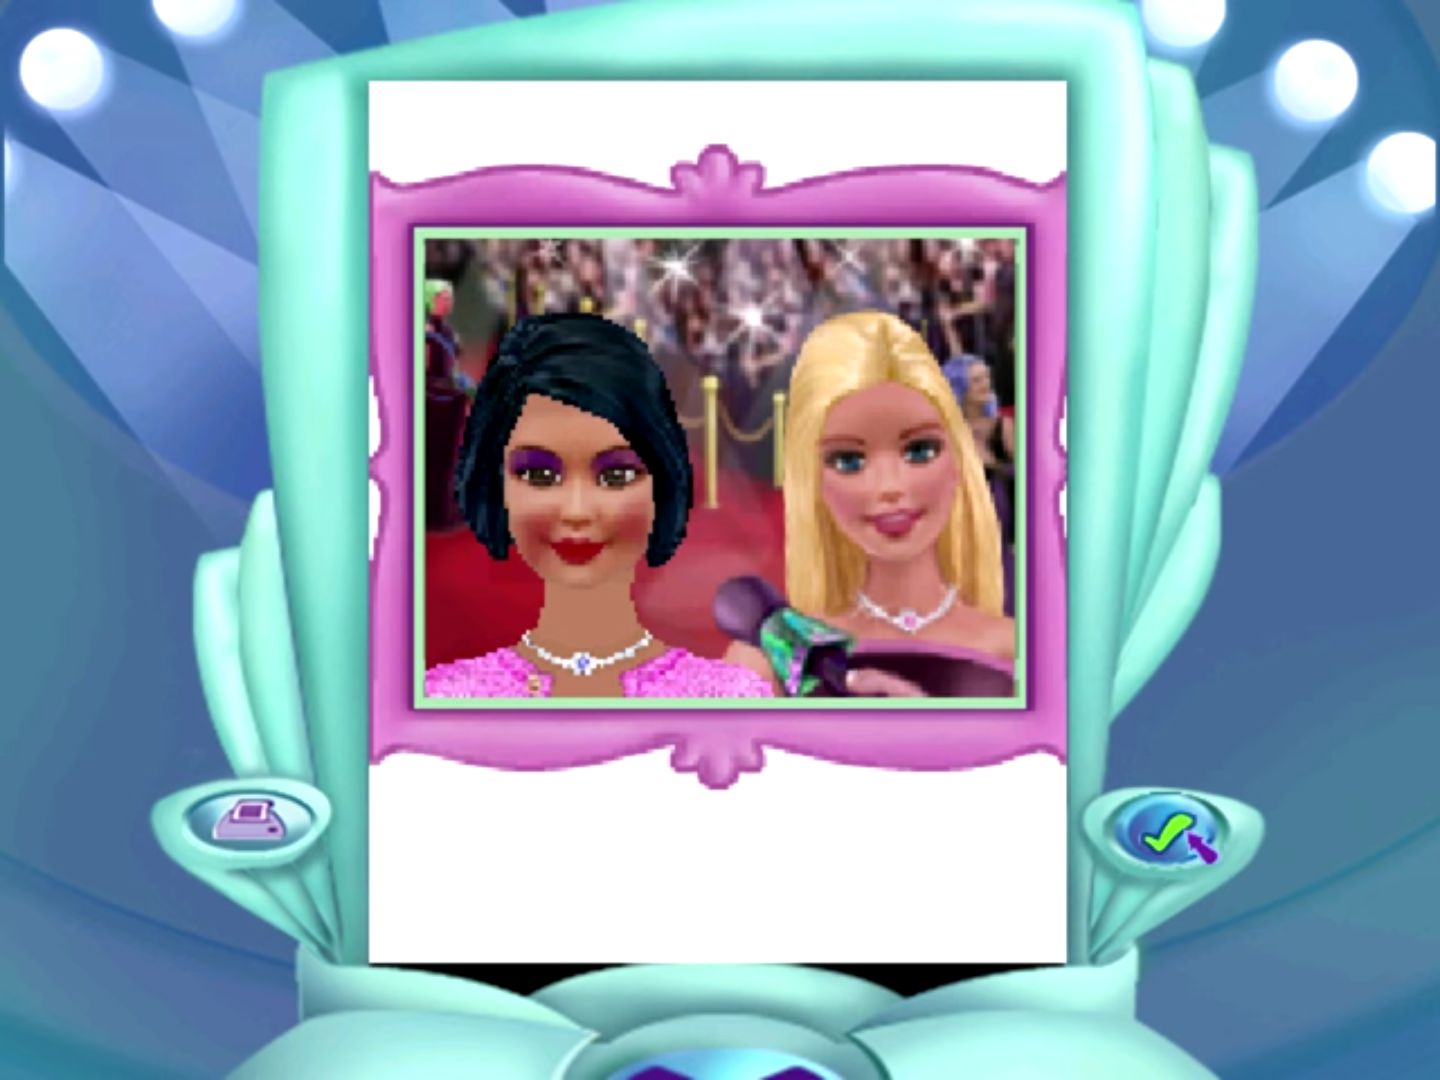 barbie digital makeover pc game